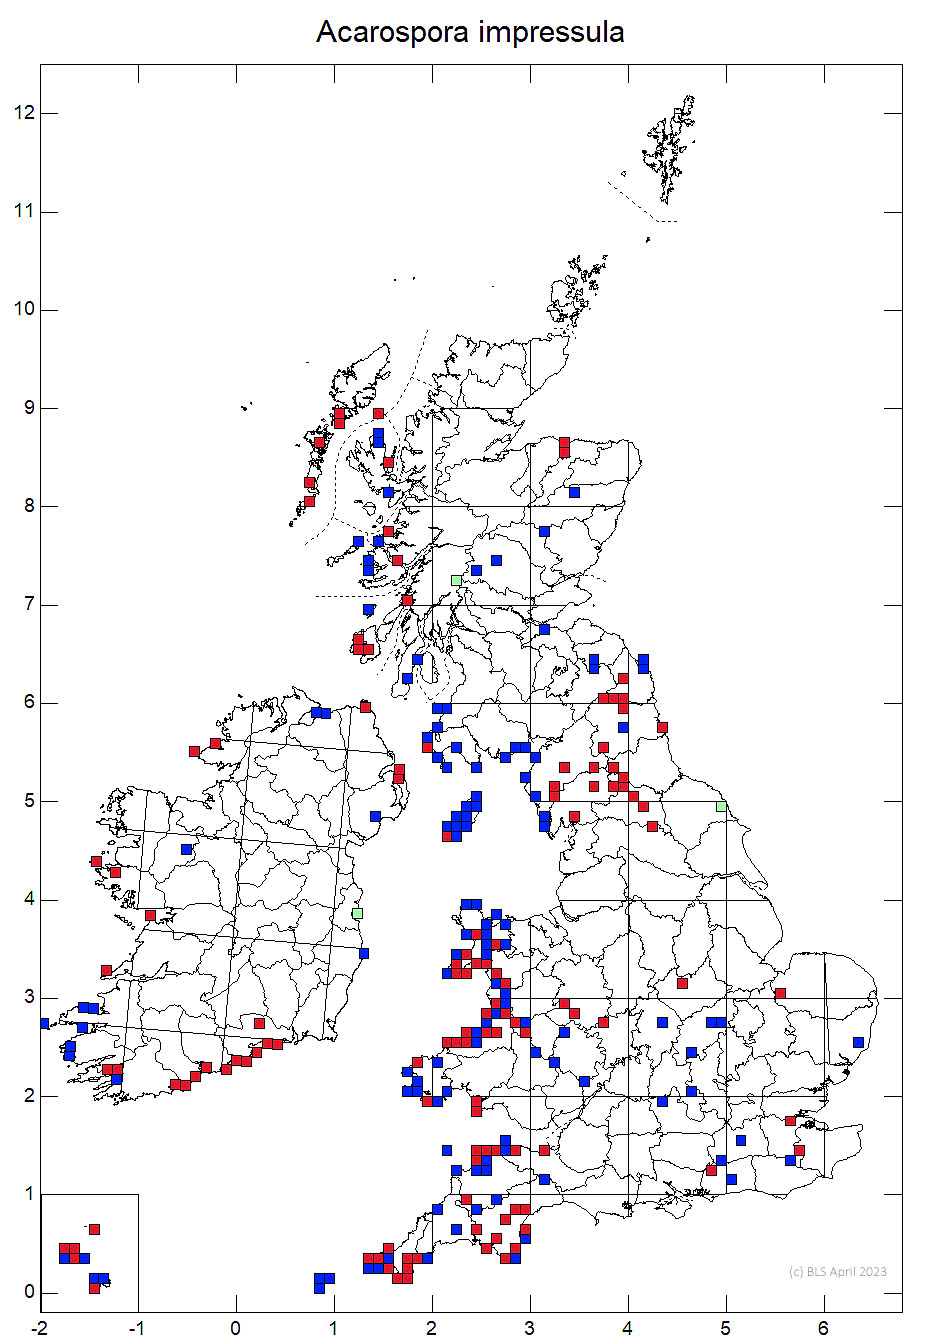 Acarospora impressula 10km sq distribution map